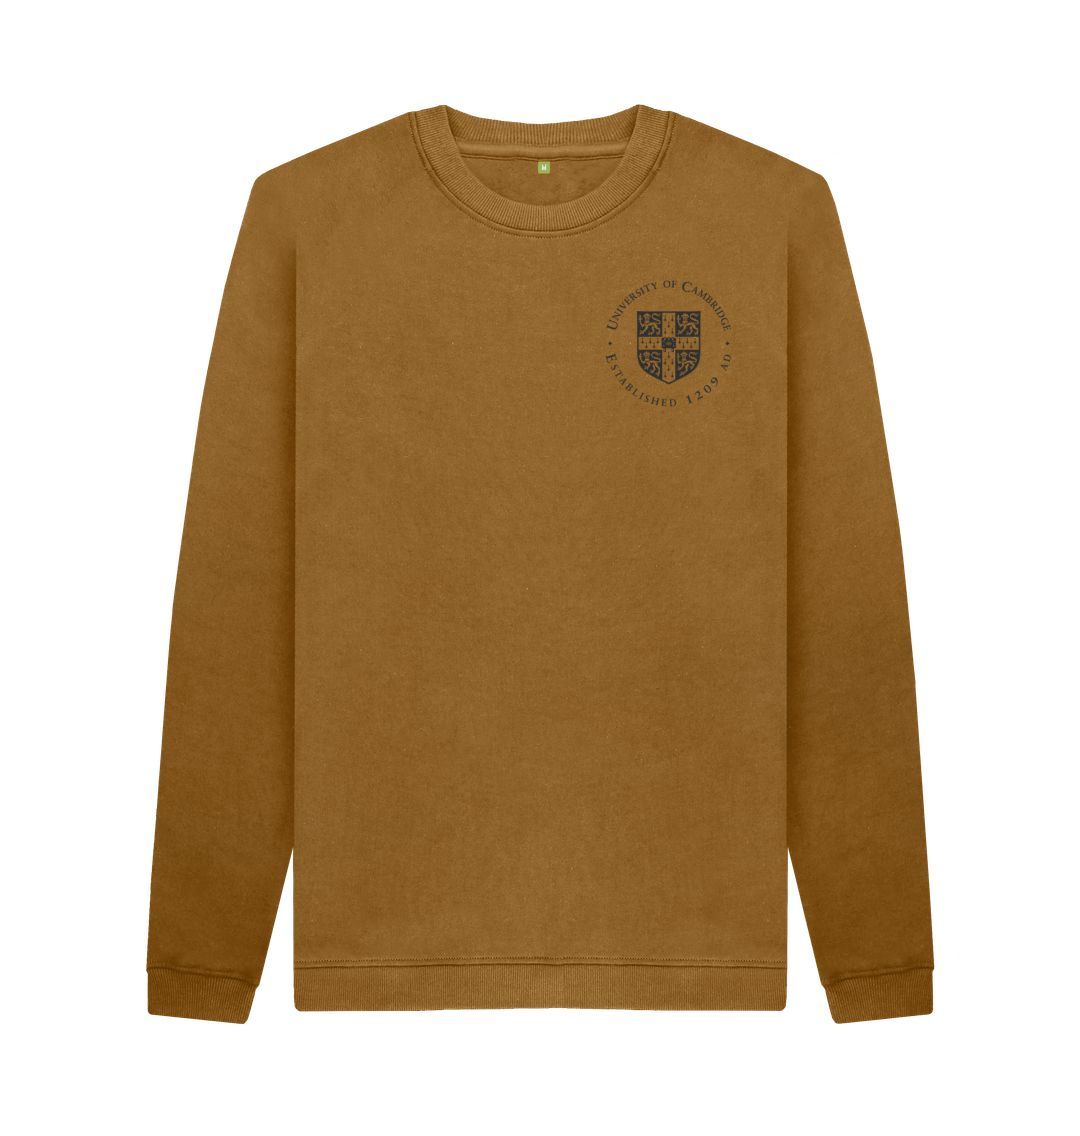 Brown Men's University of Cambridge Crew Neck Sweater, Small Shield